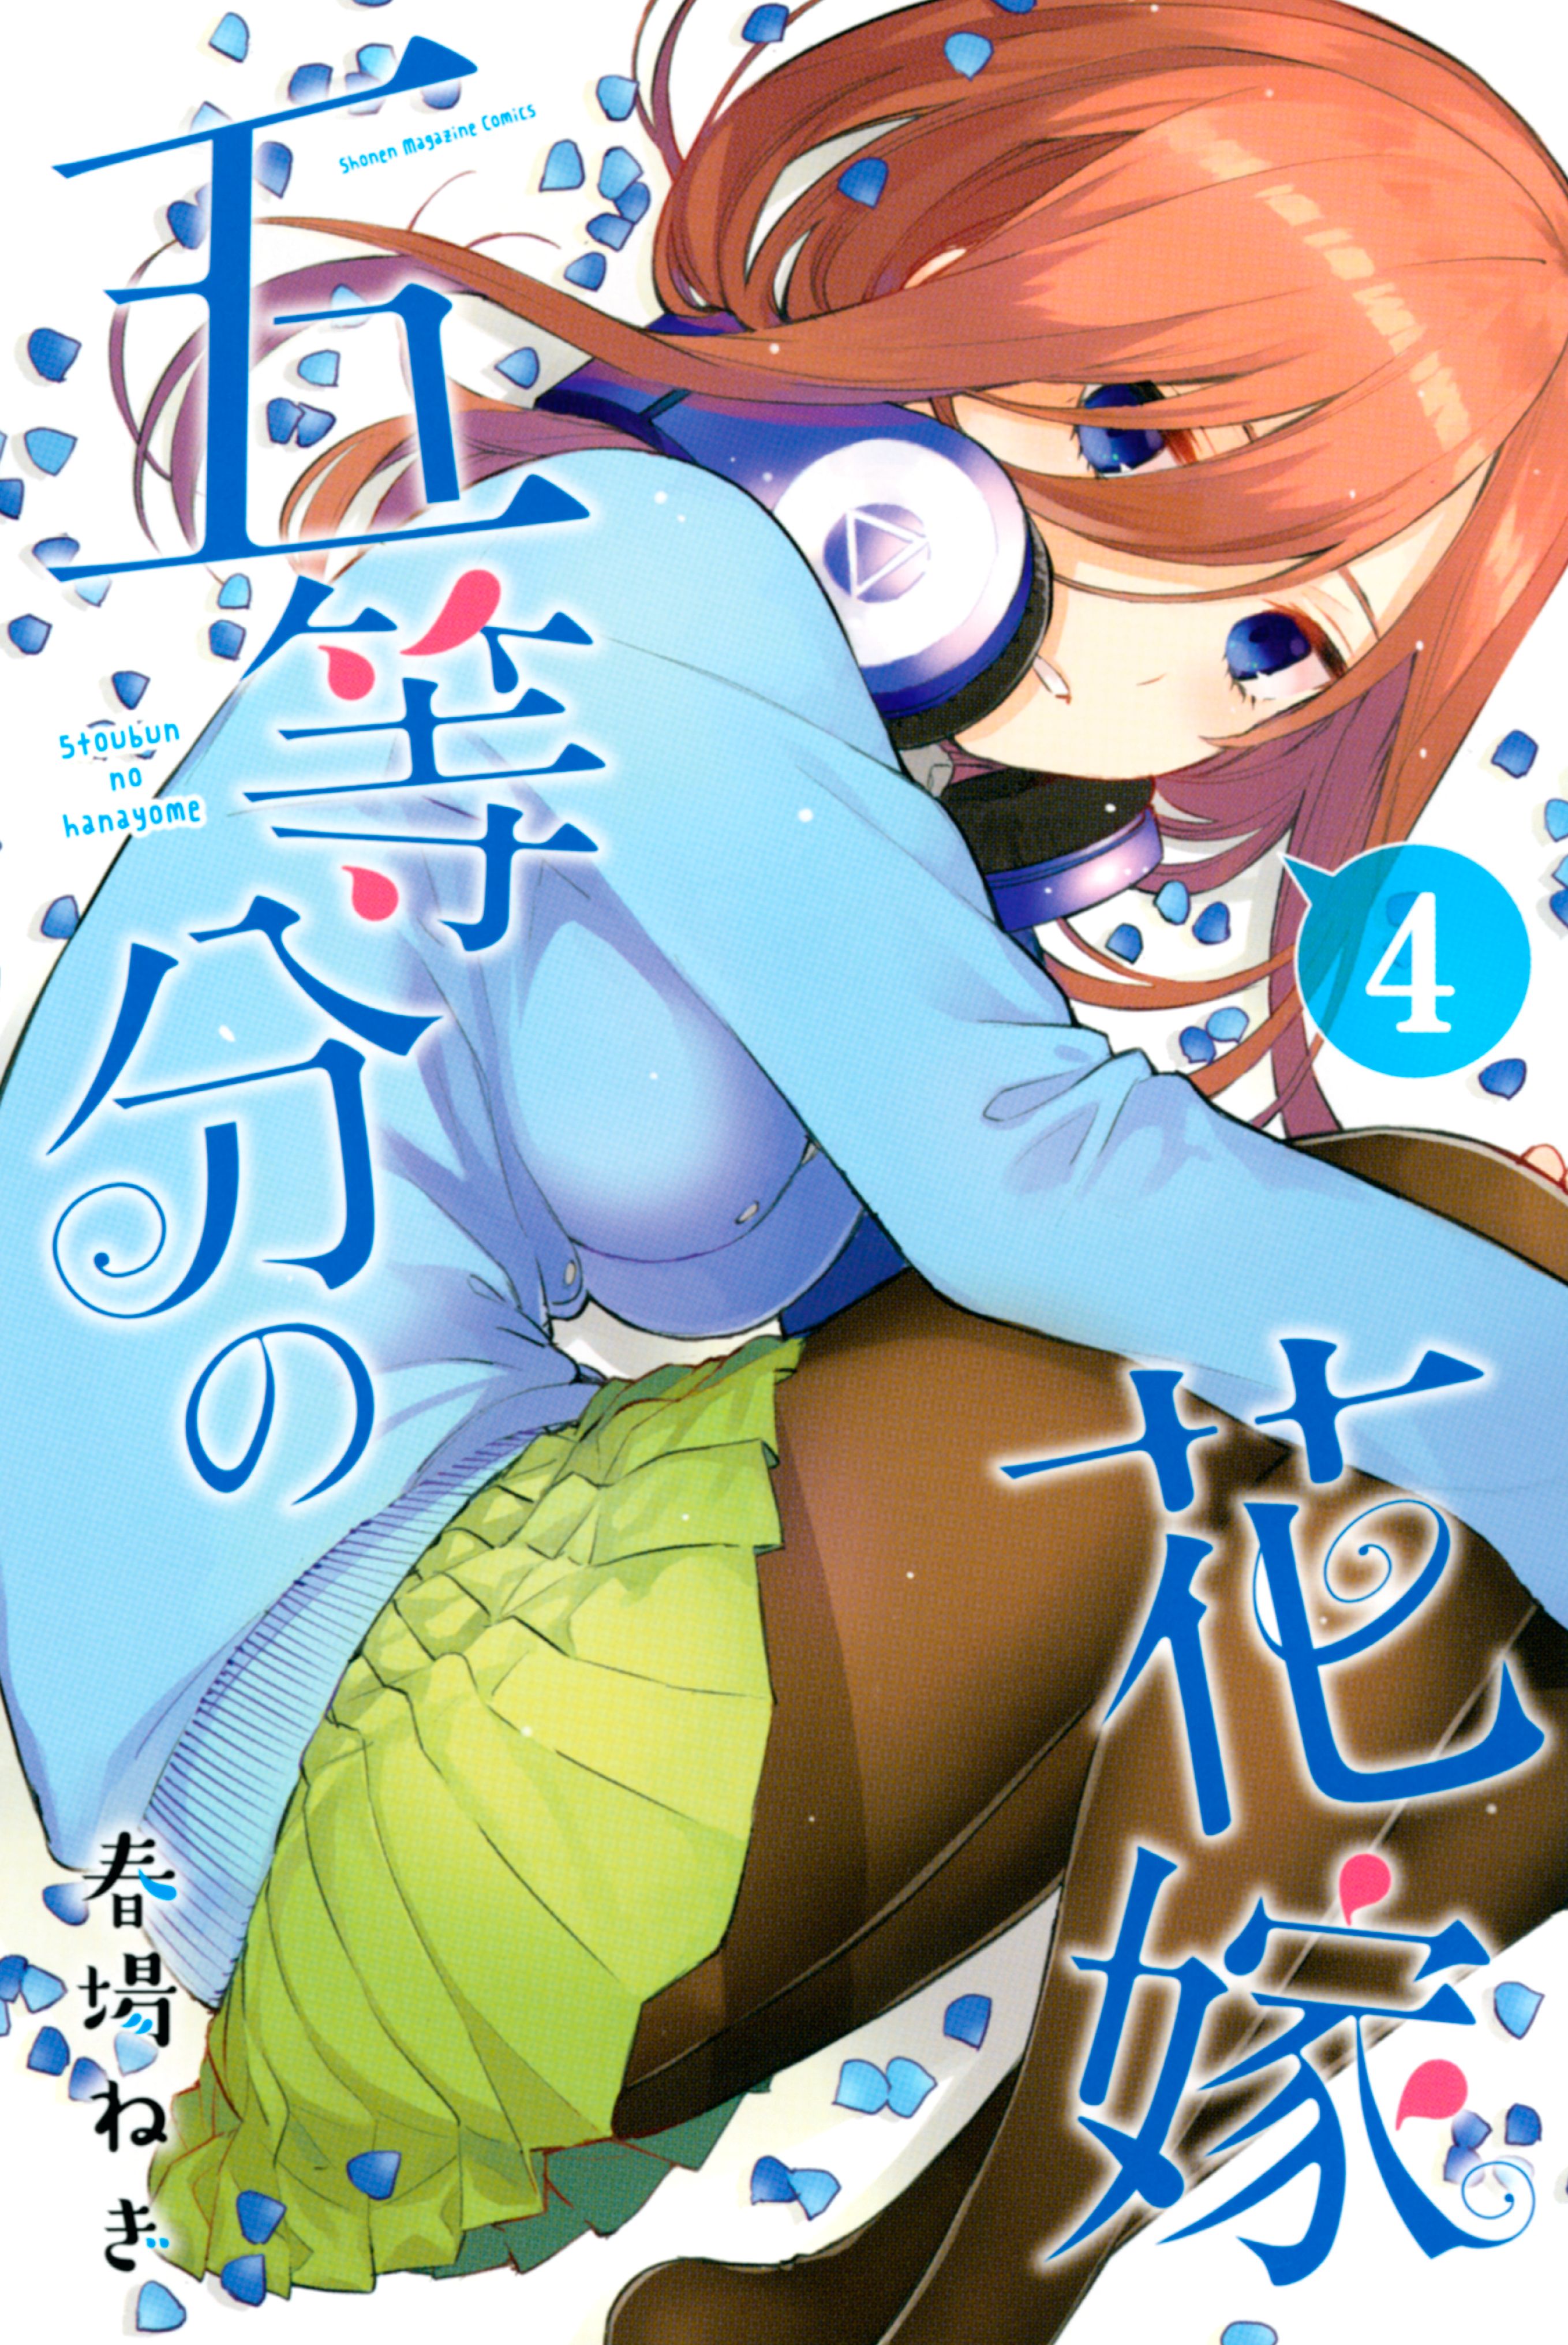 5Toubun no Hanayome - Gotoubun no Hanayome β Appendix (Doujinshi) - MangaDex